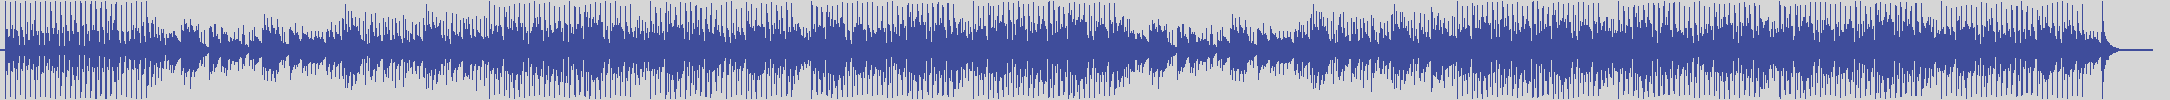 noclouds_chillout [NOC010] Alpha Carpet - Infinity [Illumination Mix] audio wave form